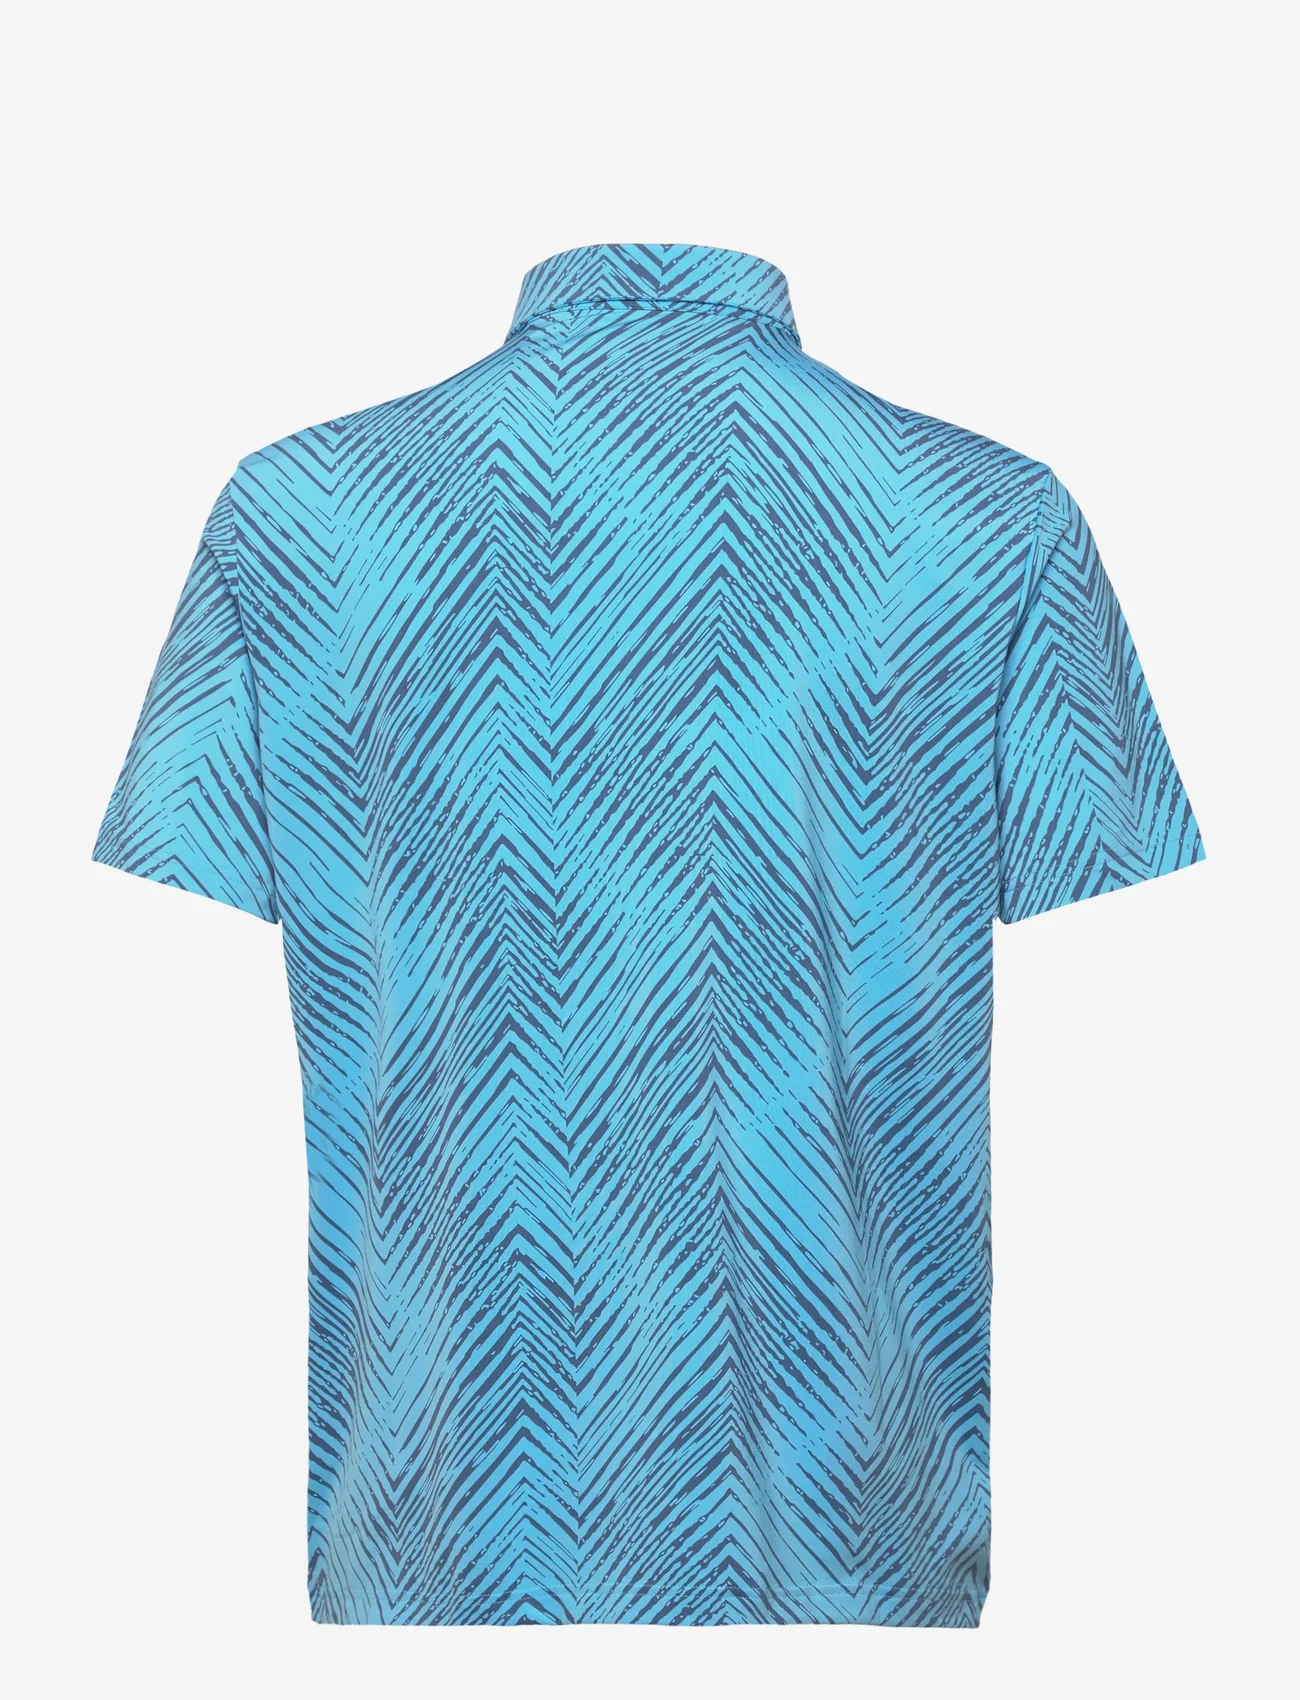 adidas Golf - ULT365 ALLOVER - polo marškinėliai trumpomis rankovėmis - seblbu/prloin - 1